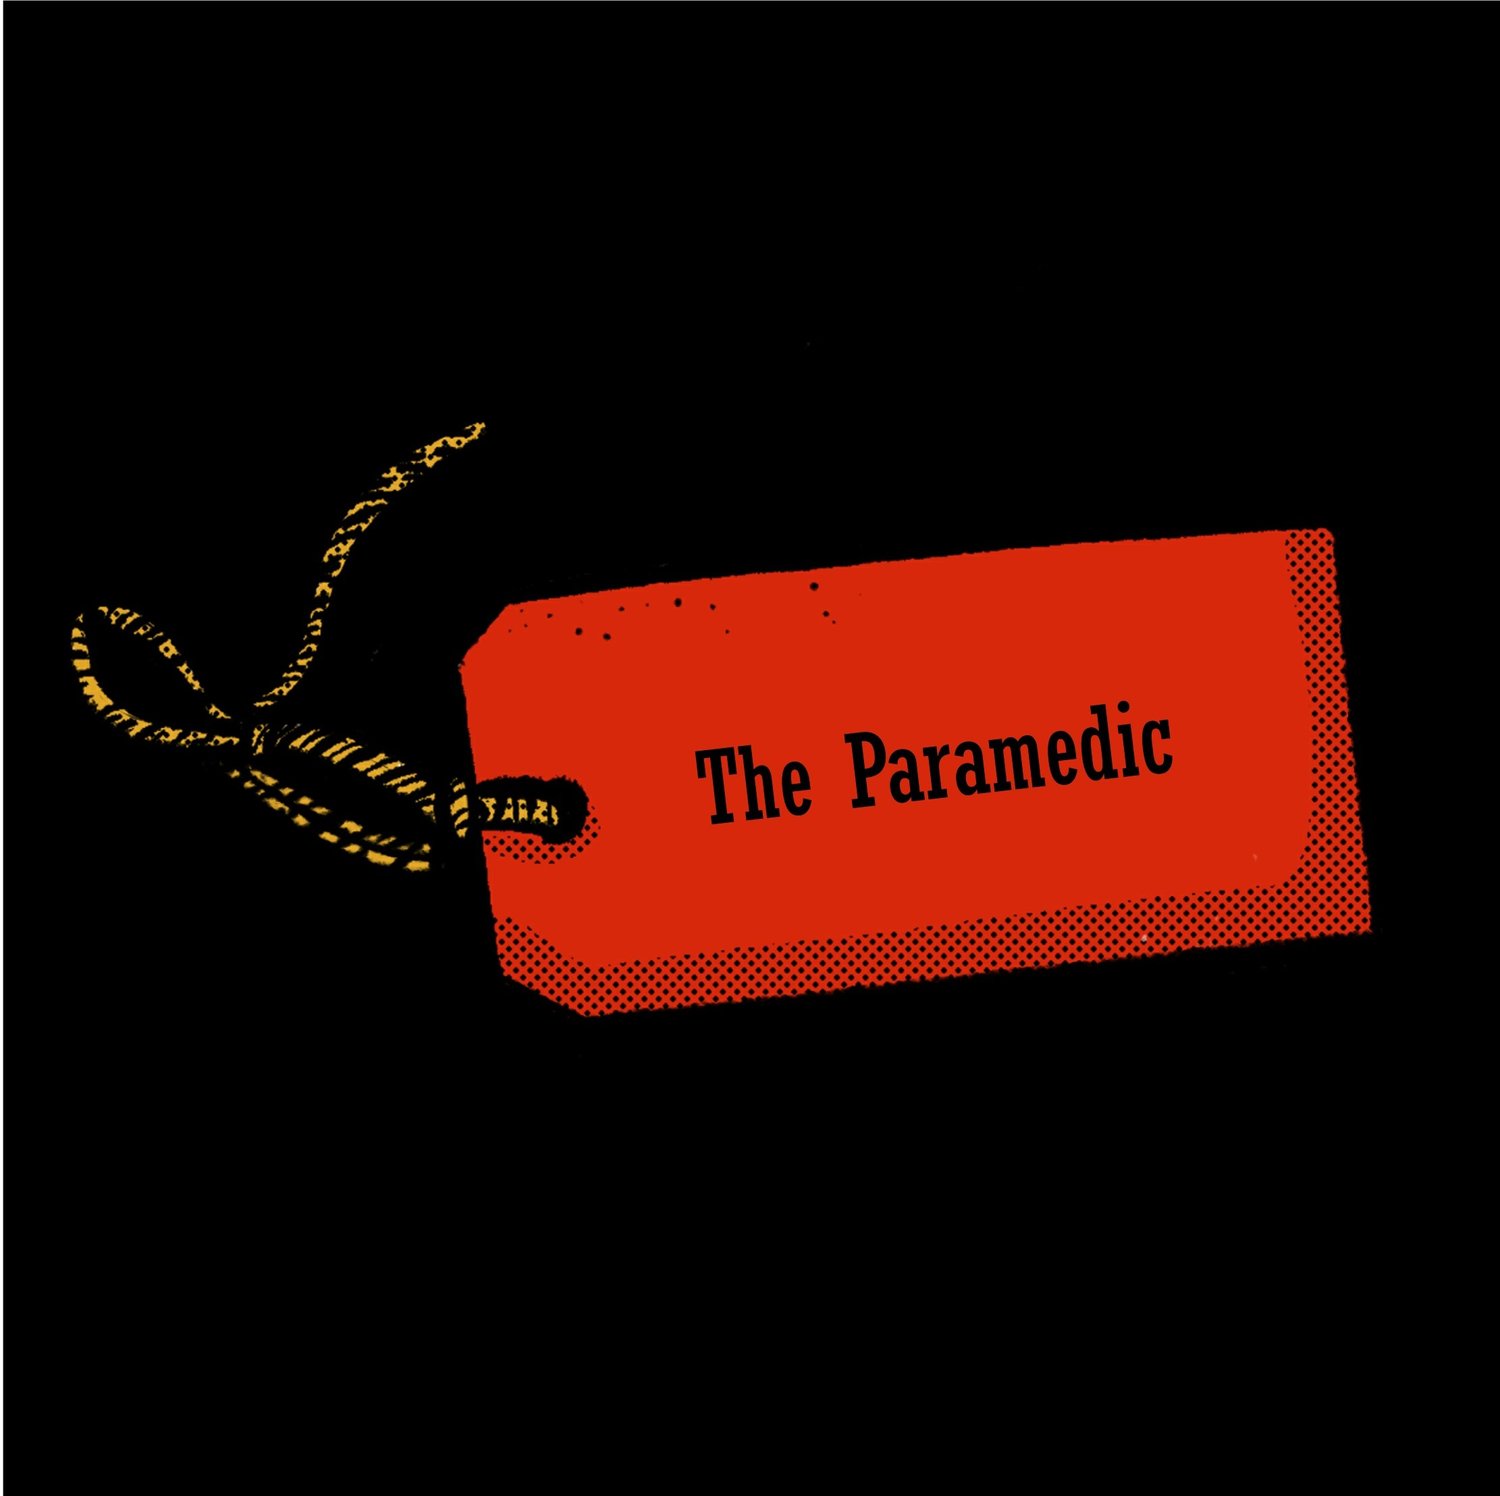 Episode 11: The Paramedic